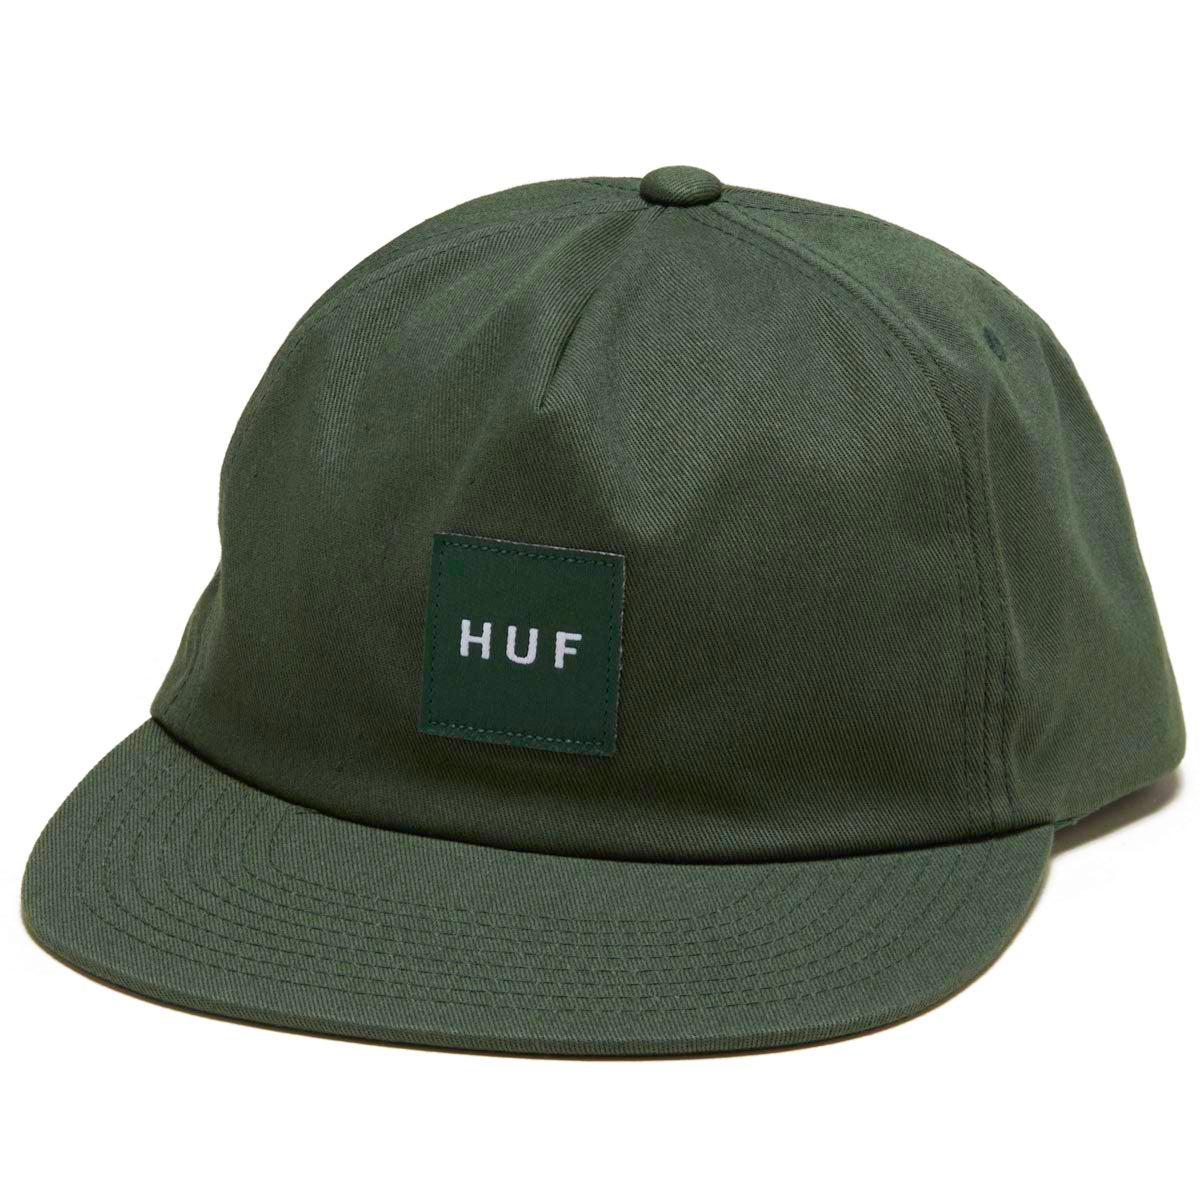 HUF Set Box Snapback Hat - Avocado image 1